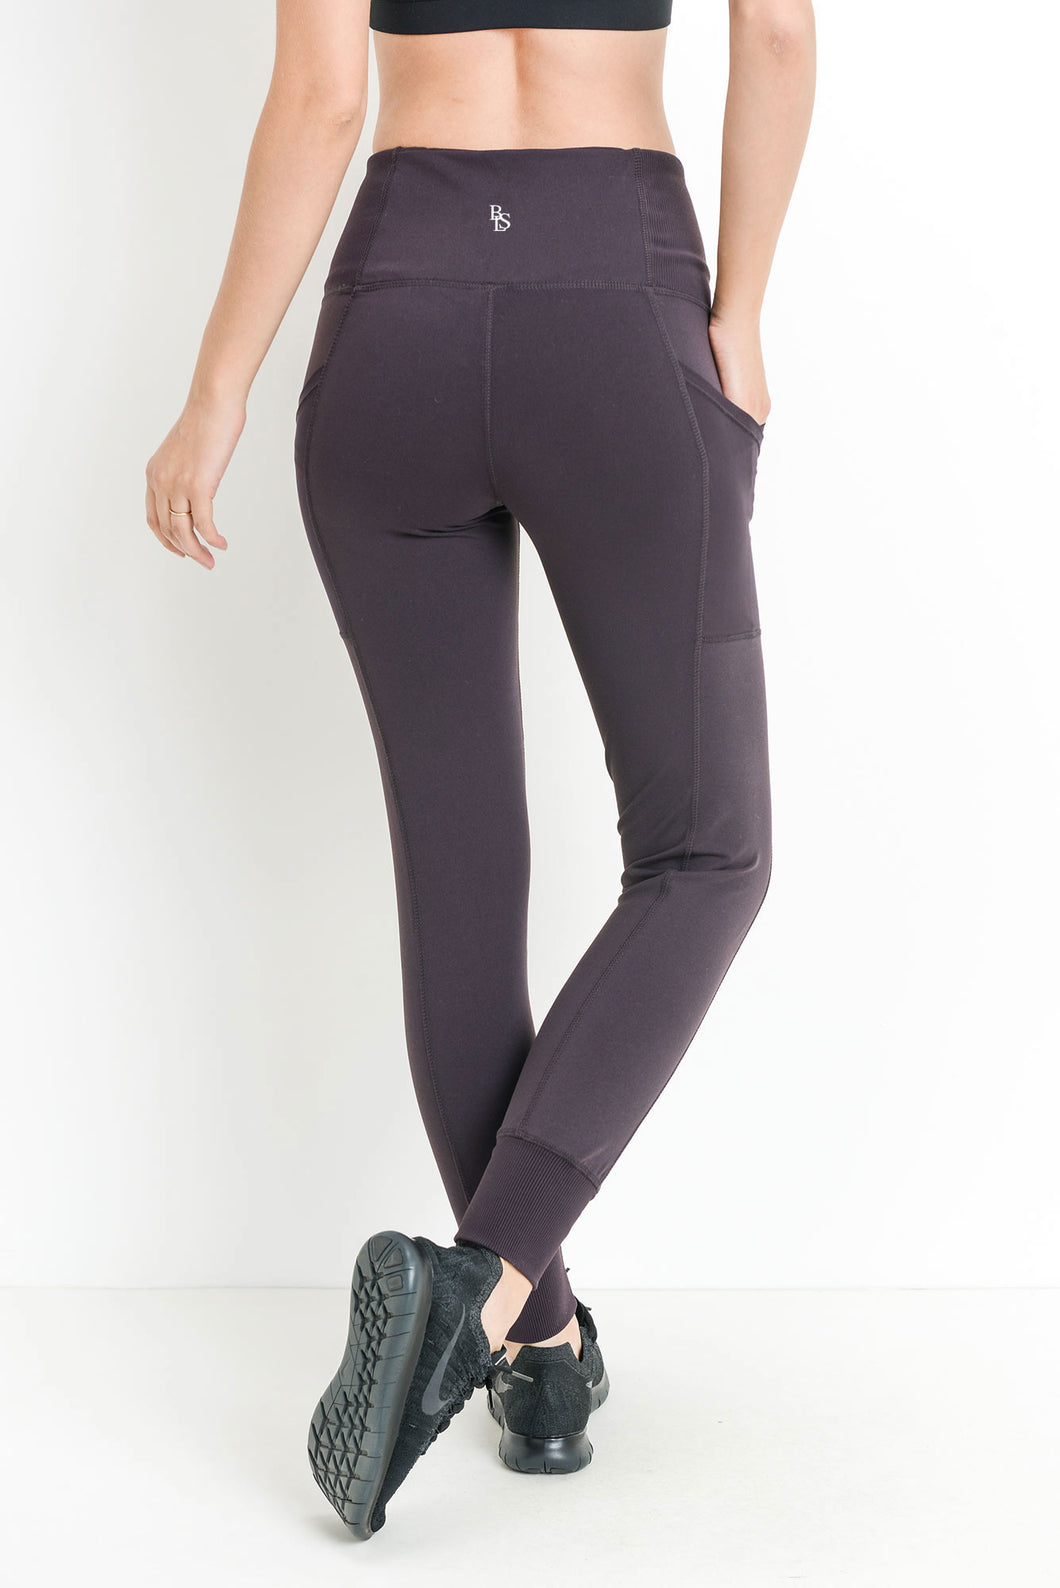 Wholesale Womens High Waist Tummy Control Sports Leggings With Side Mesh  Pocket Panels - Mauve